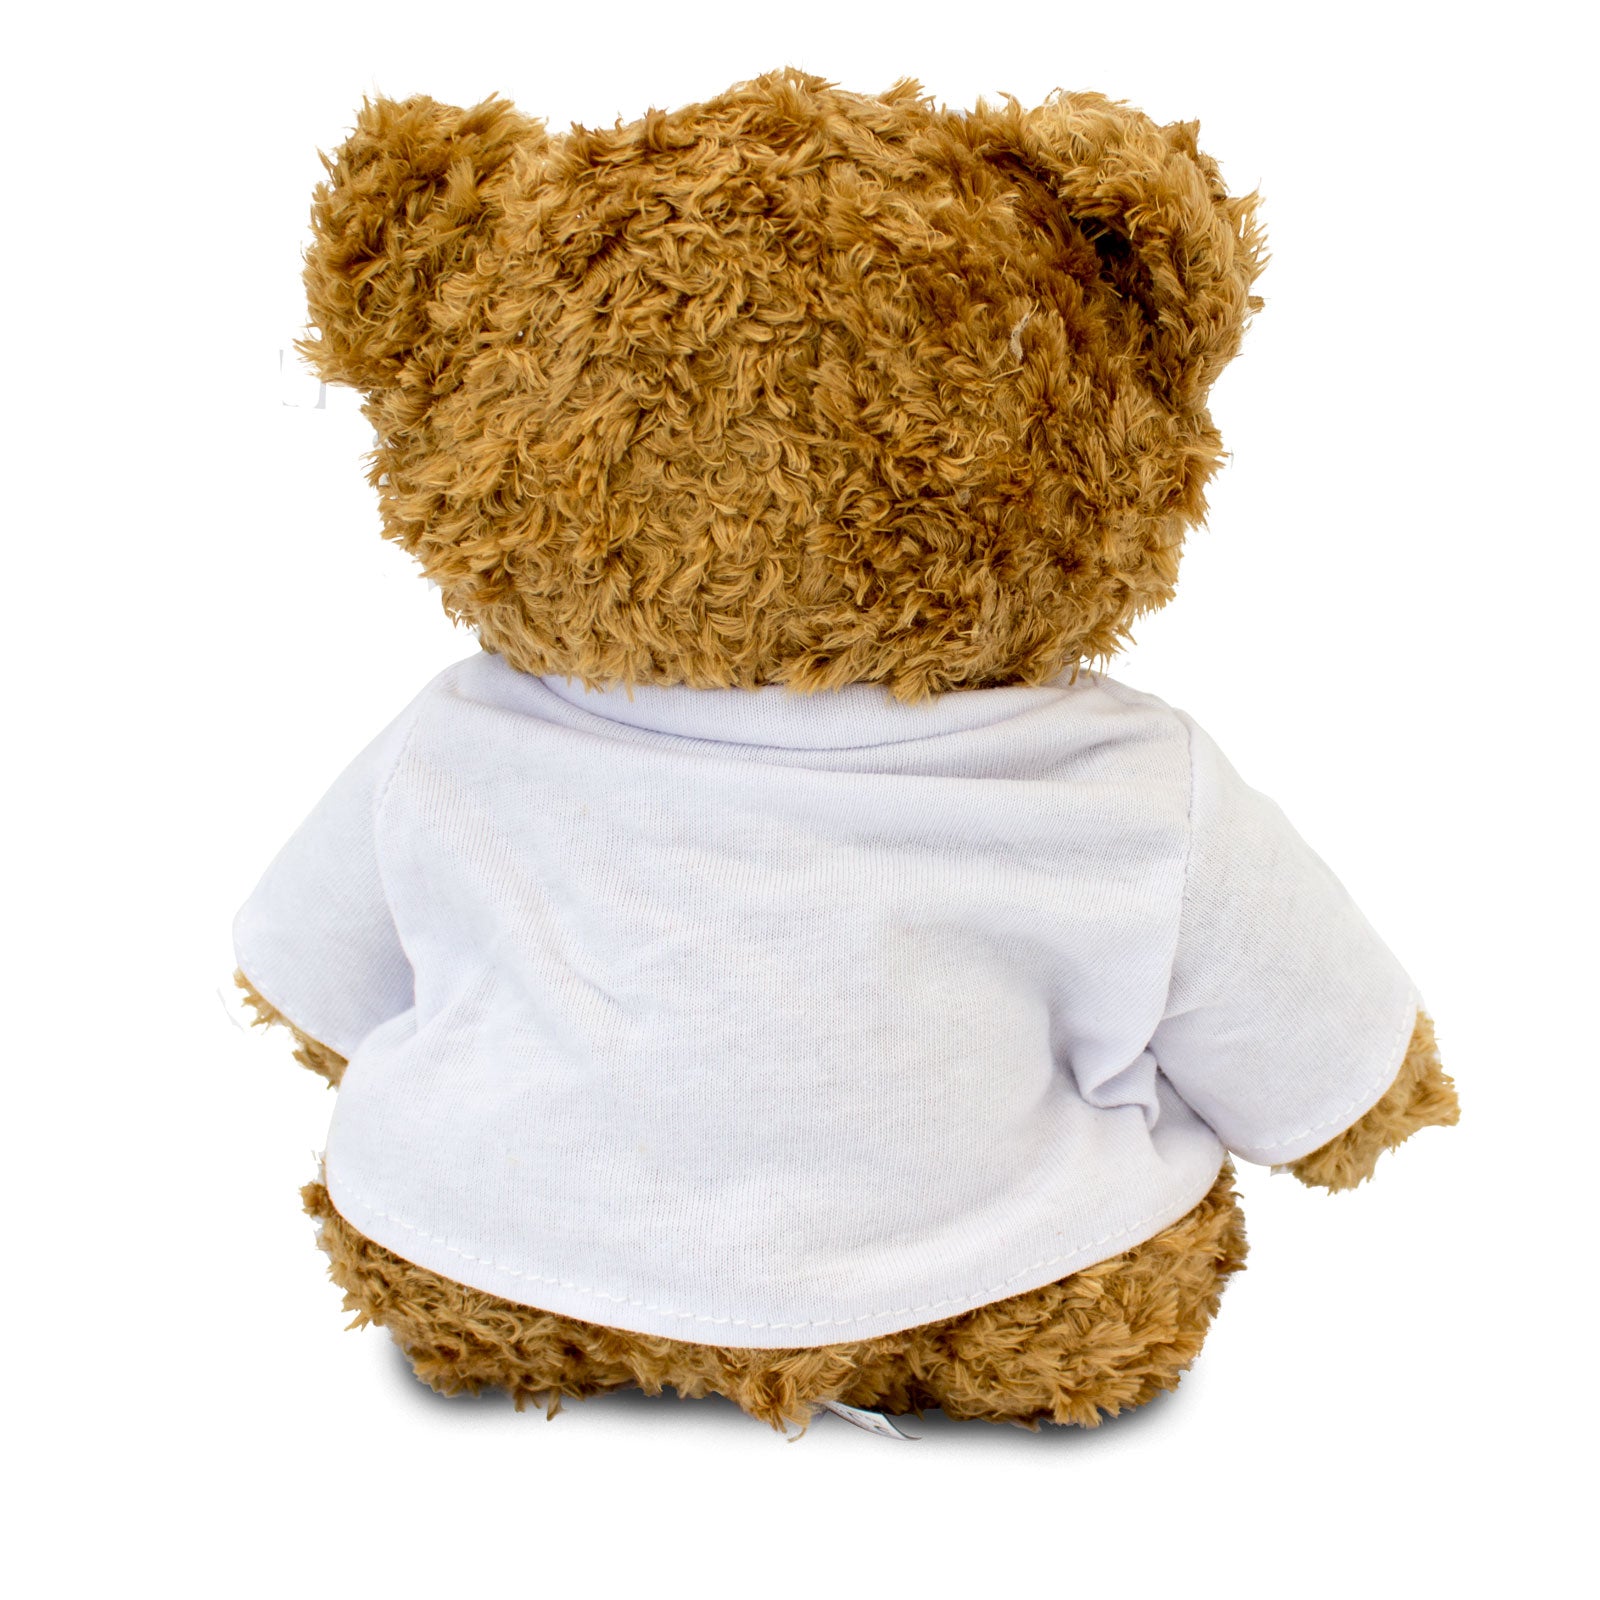 Get Well Soon Guillermo - Teddy Bear